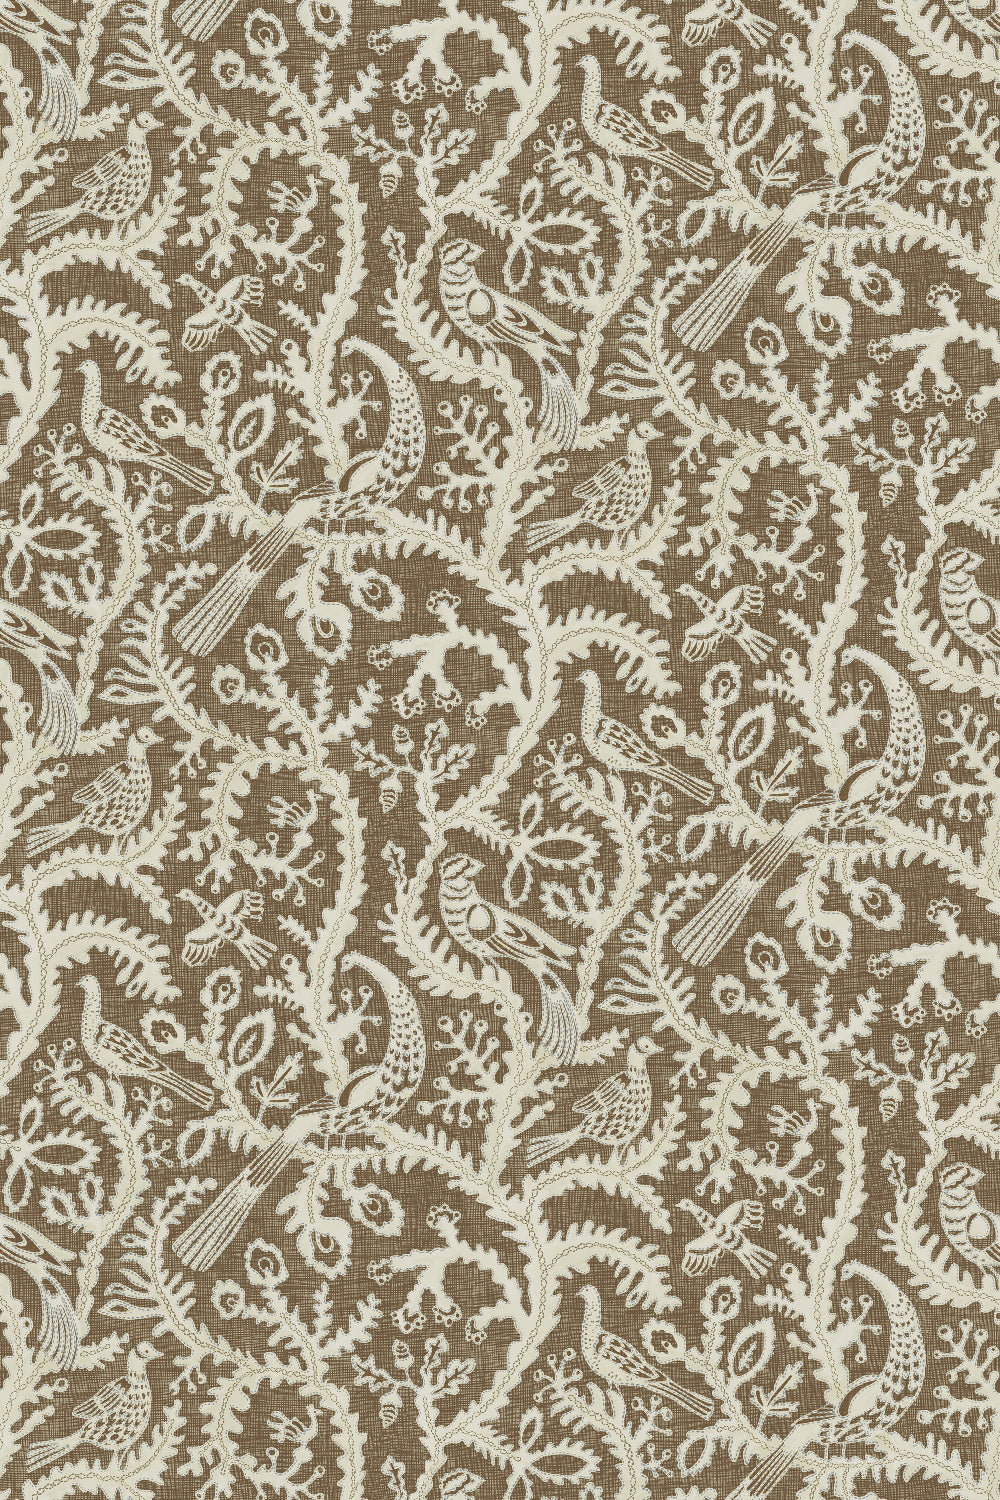 Josephine-Munsey-wallpaper-stitched-birds-lace-effect-birds-textile-background-brownJMW1035.21.0